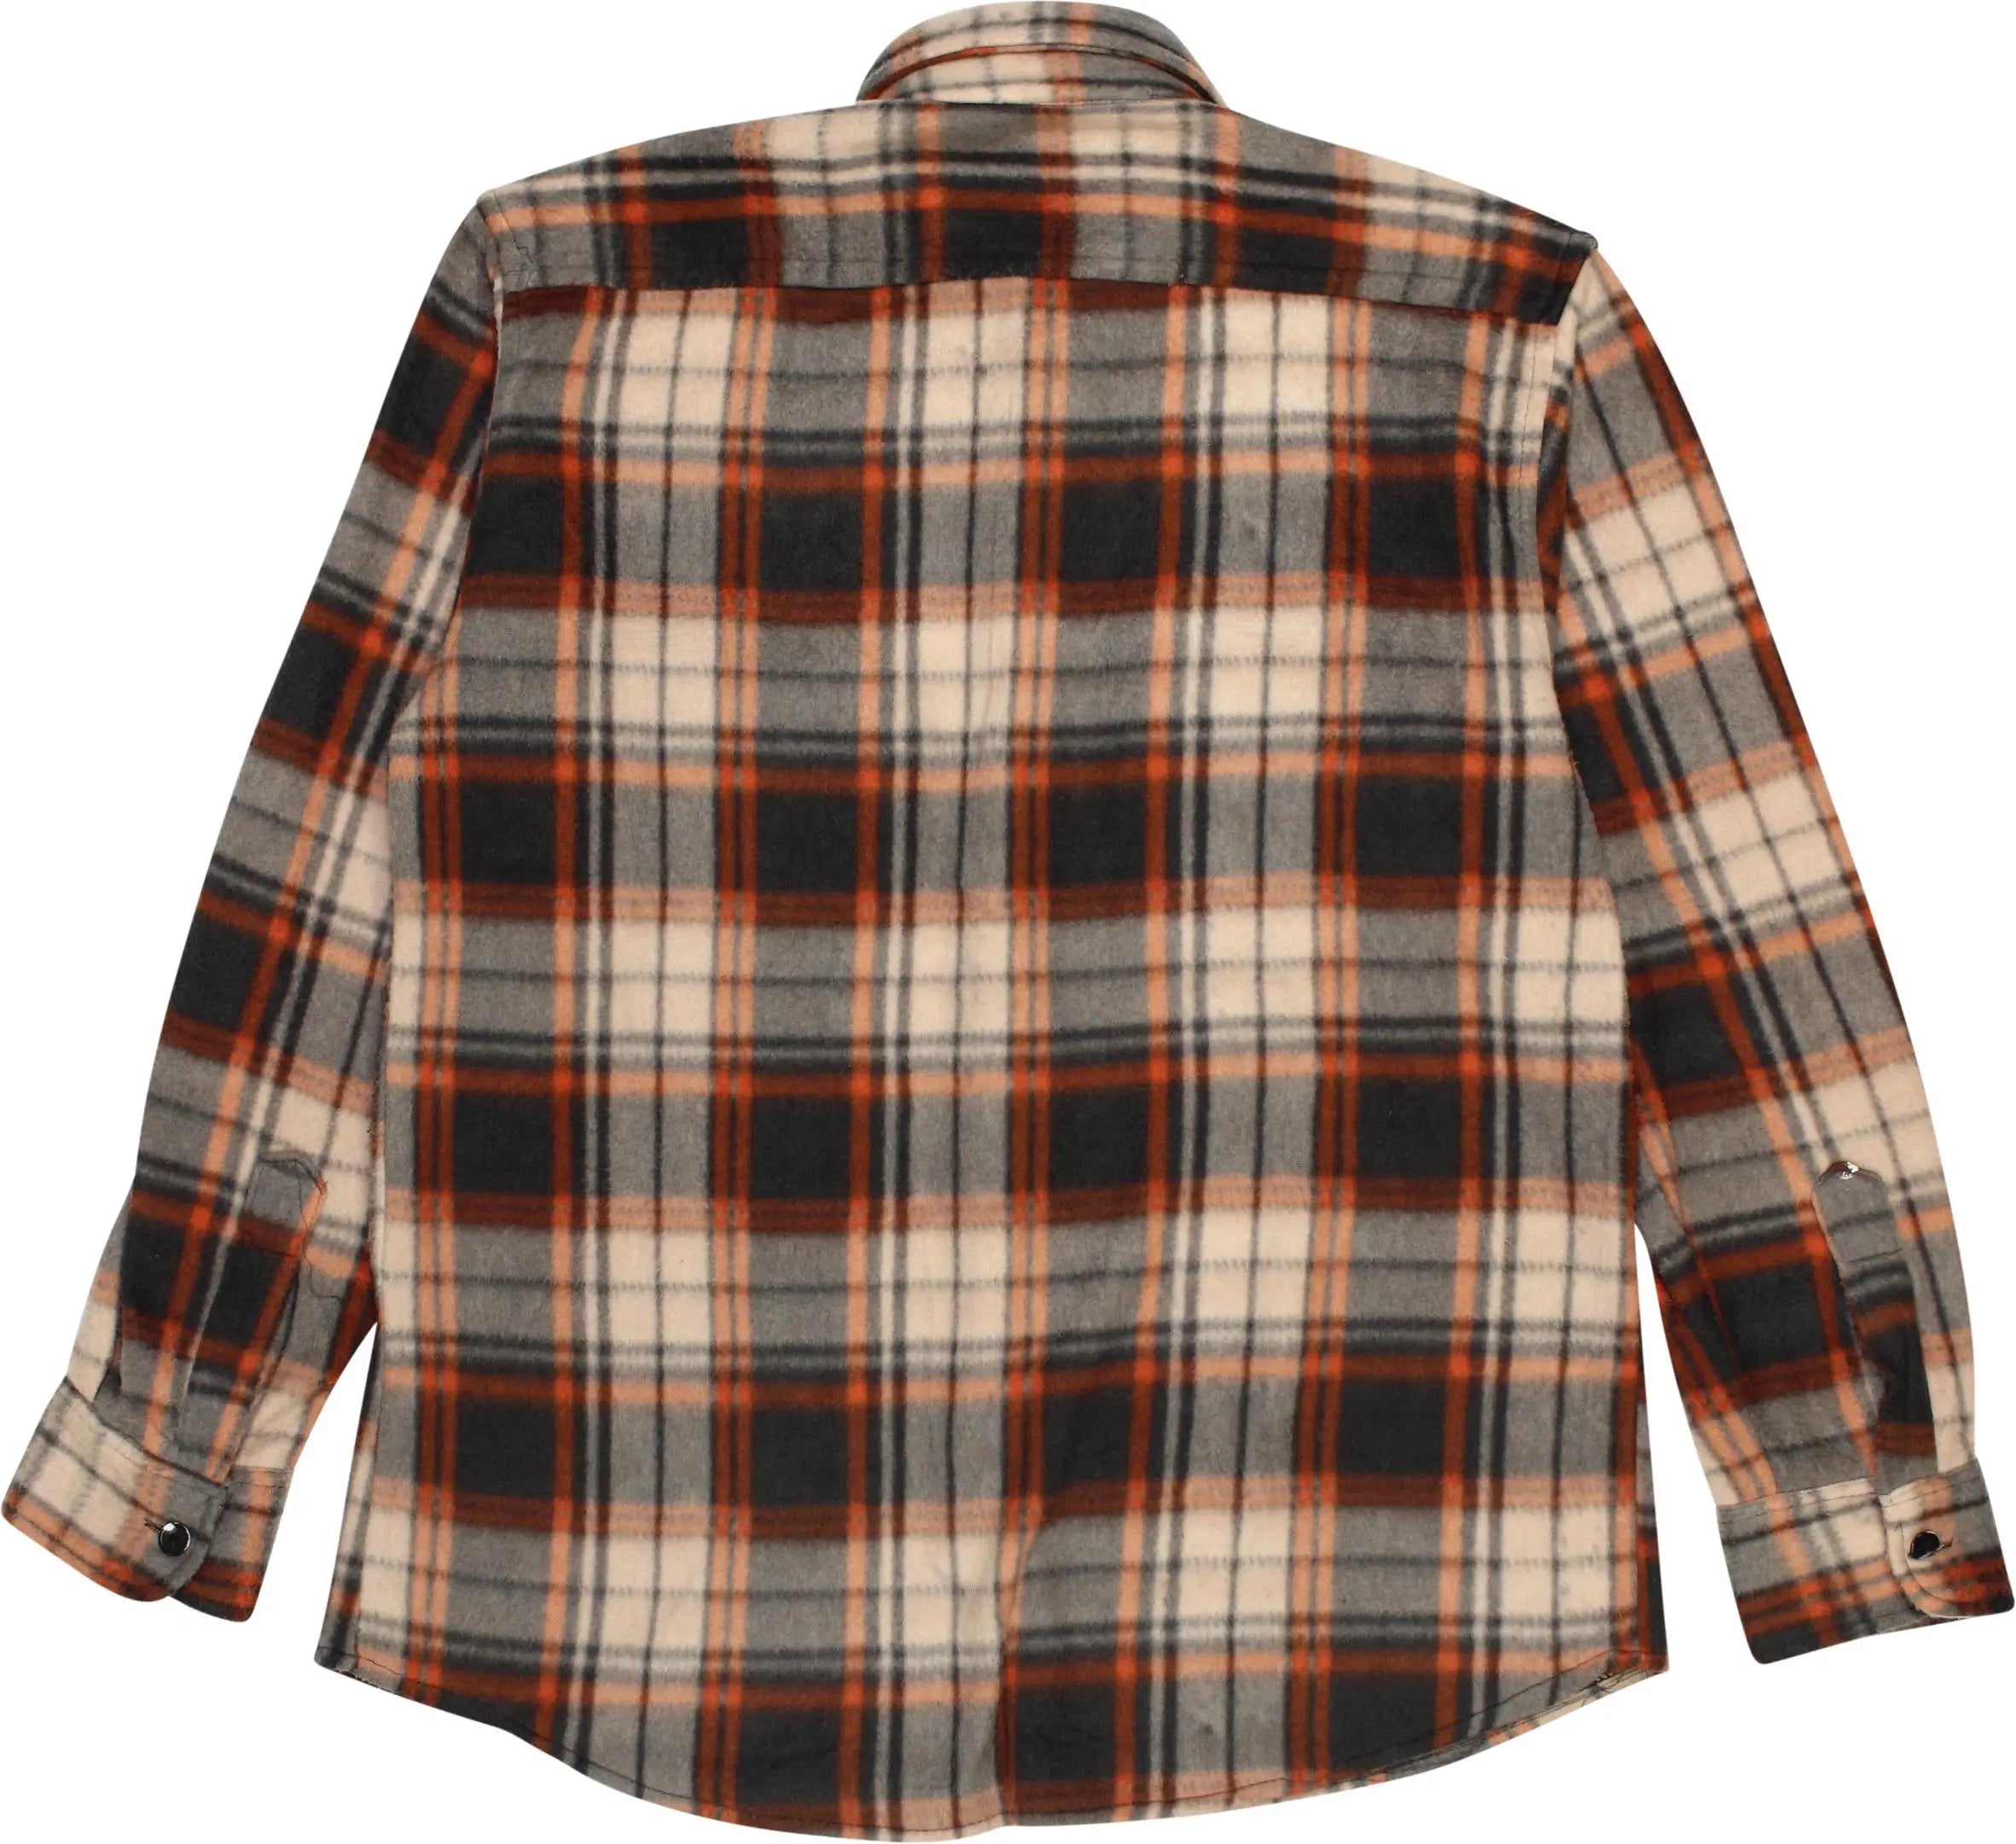 Fuging - Flannel Fleece Shirt- ThriftTale.com - Vintage and second handclothing